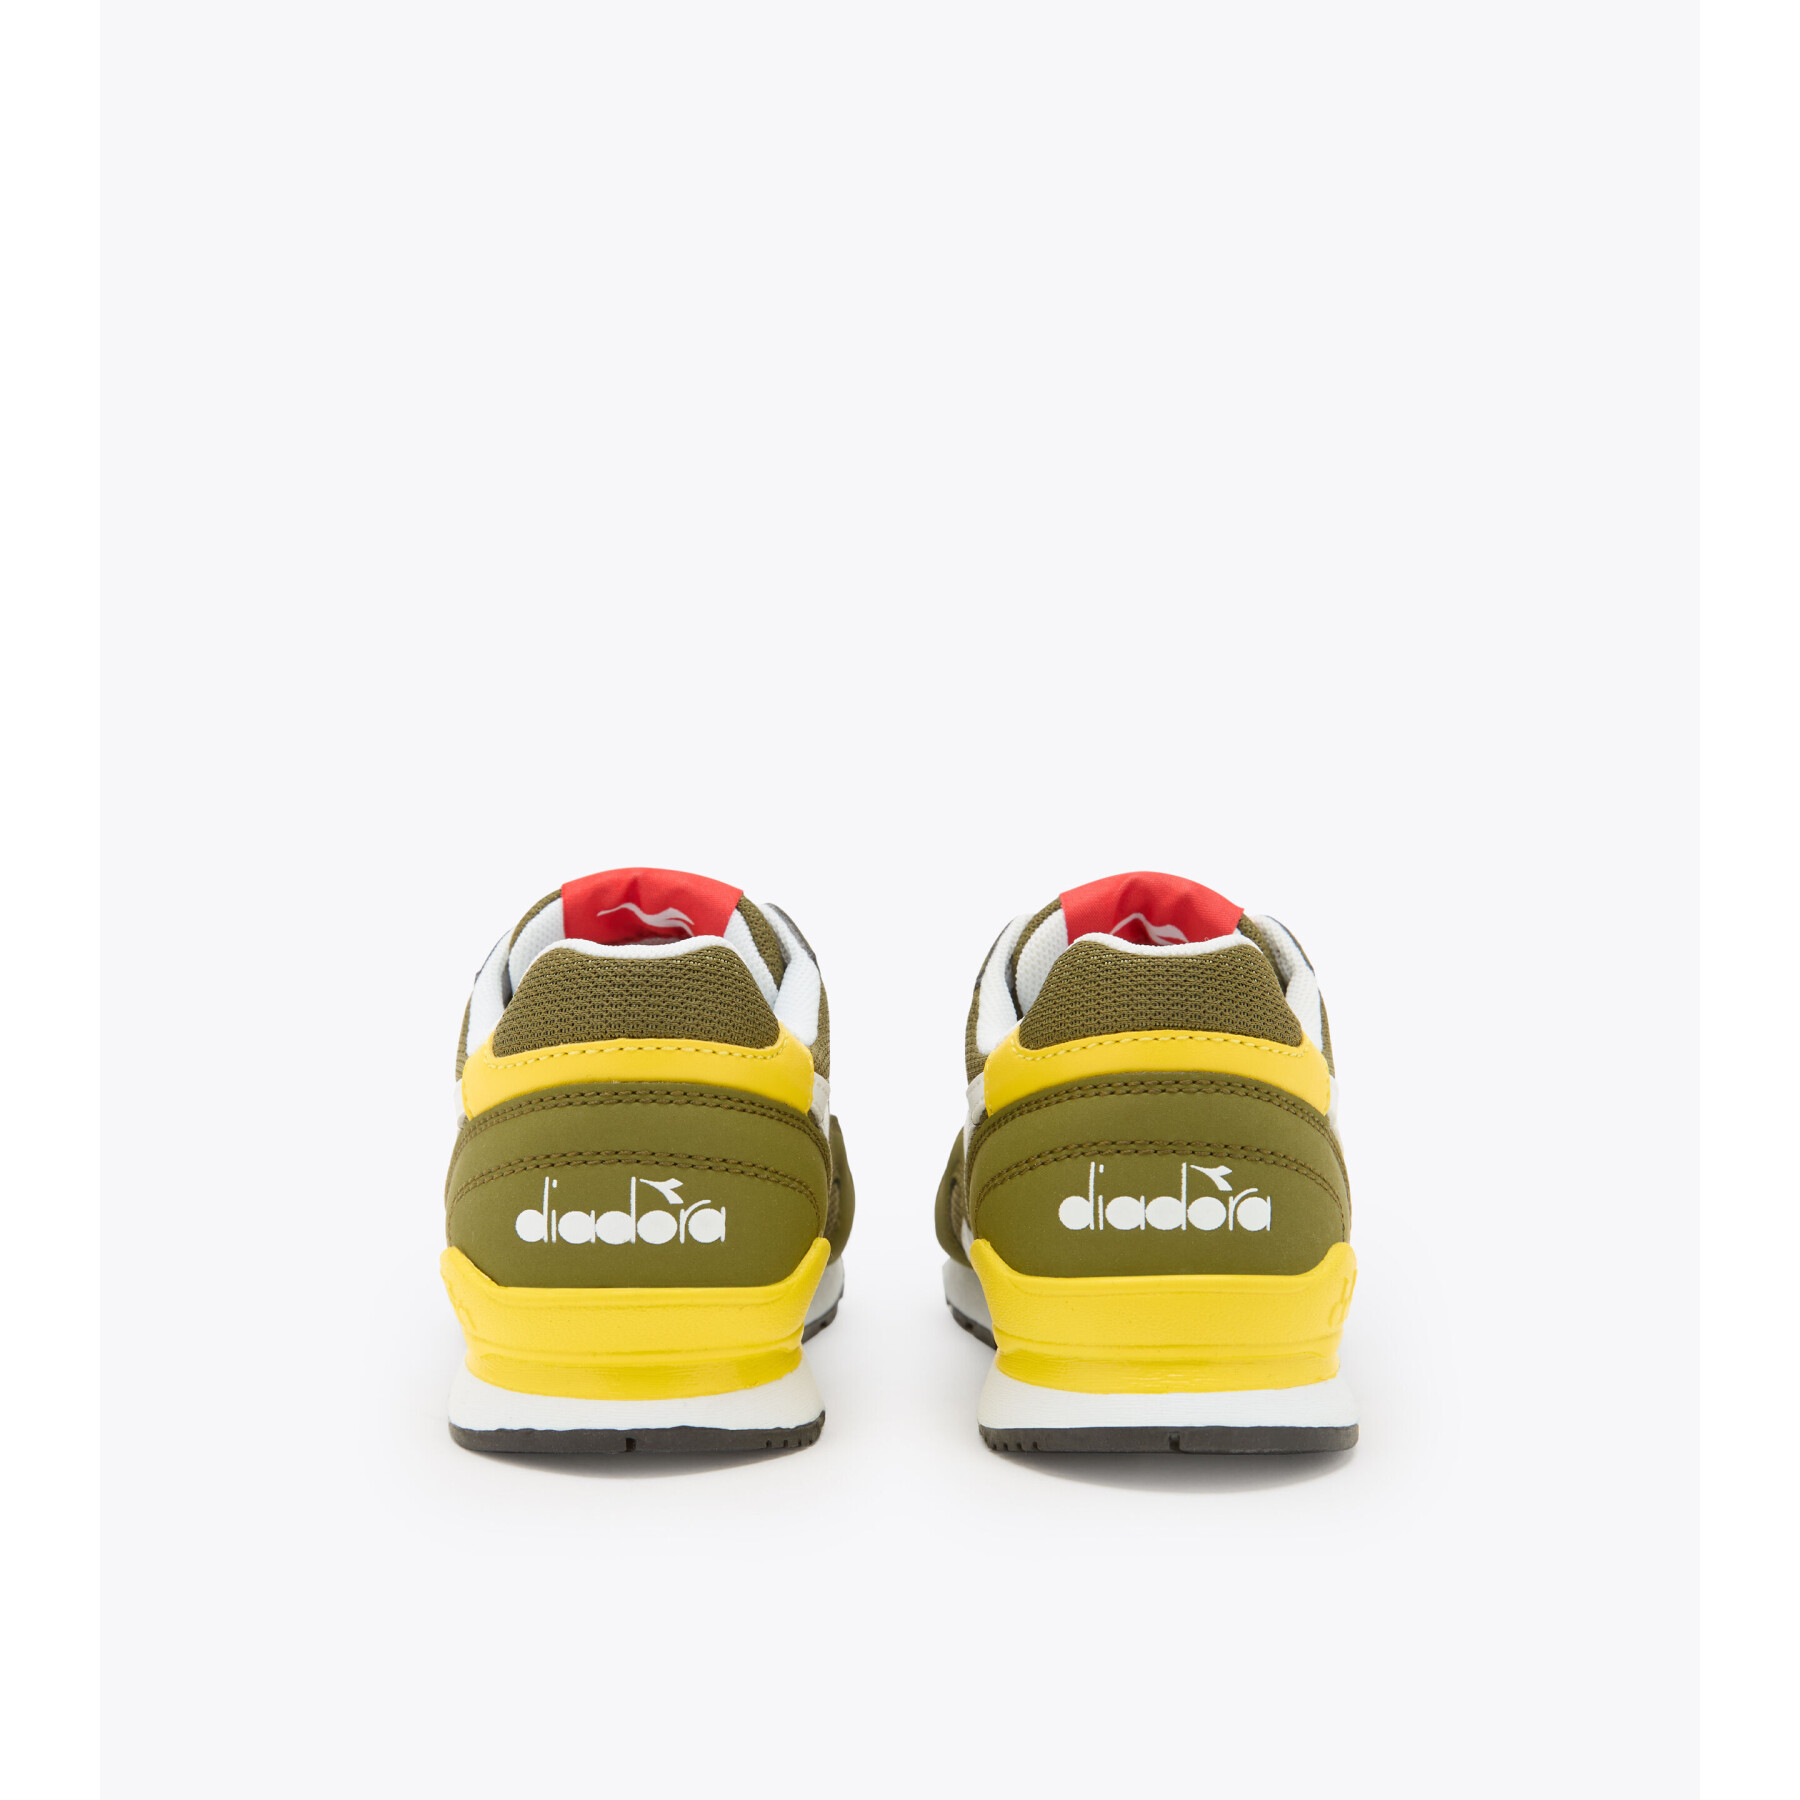 Children's sneakers Diadora N.92 PS